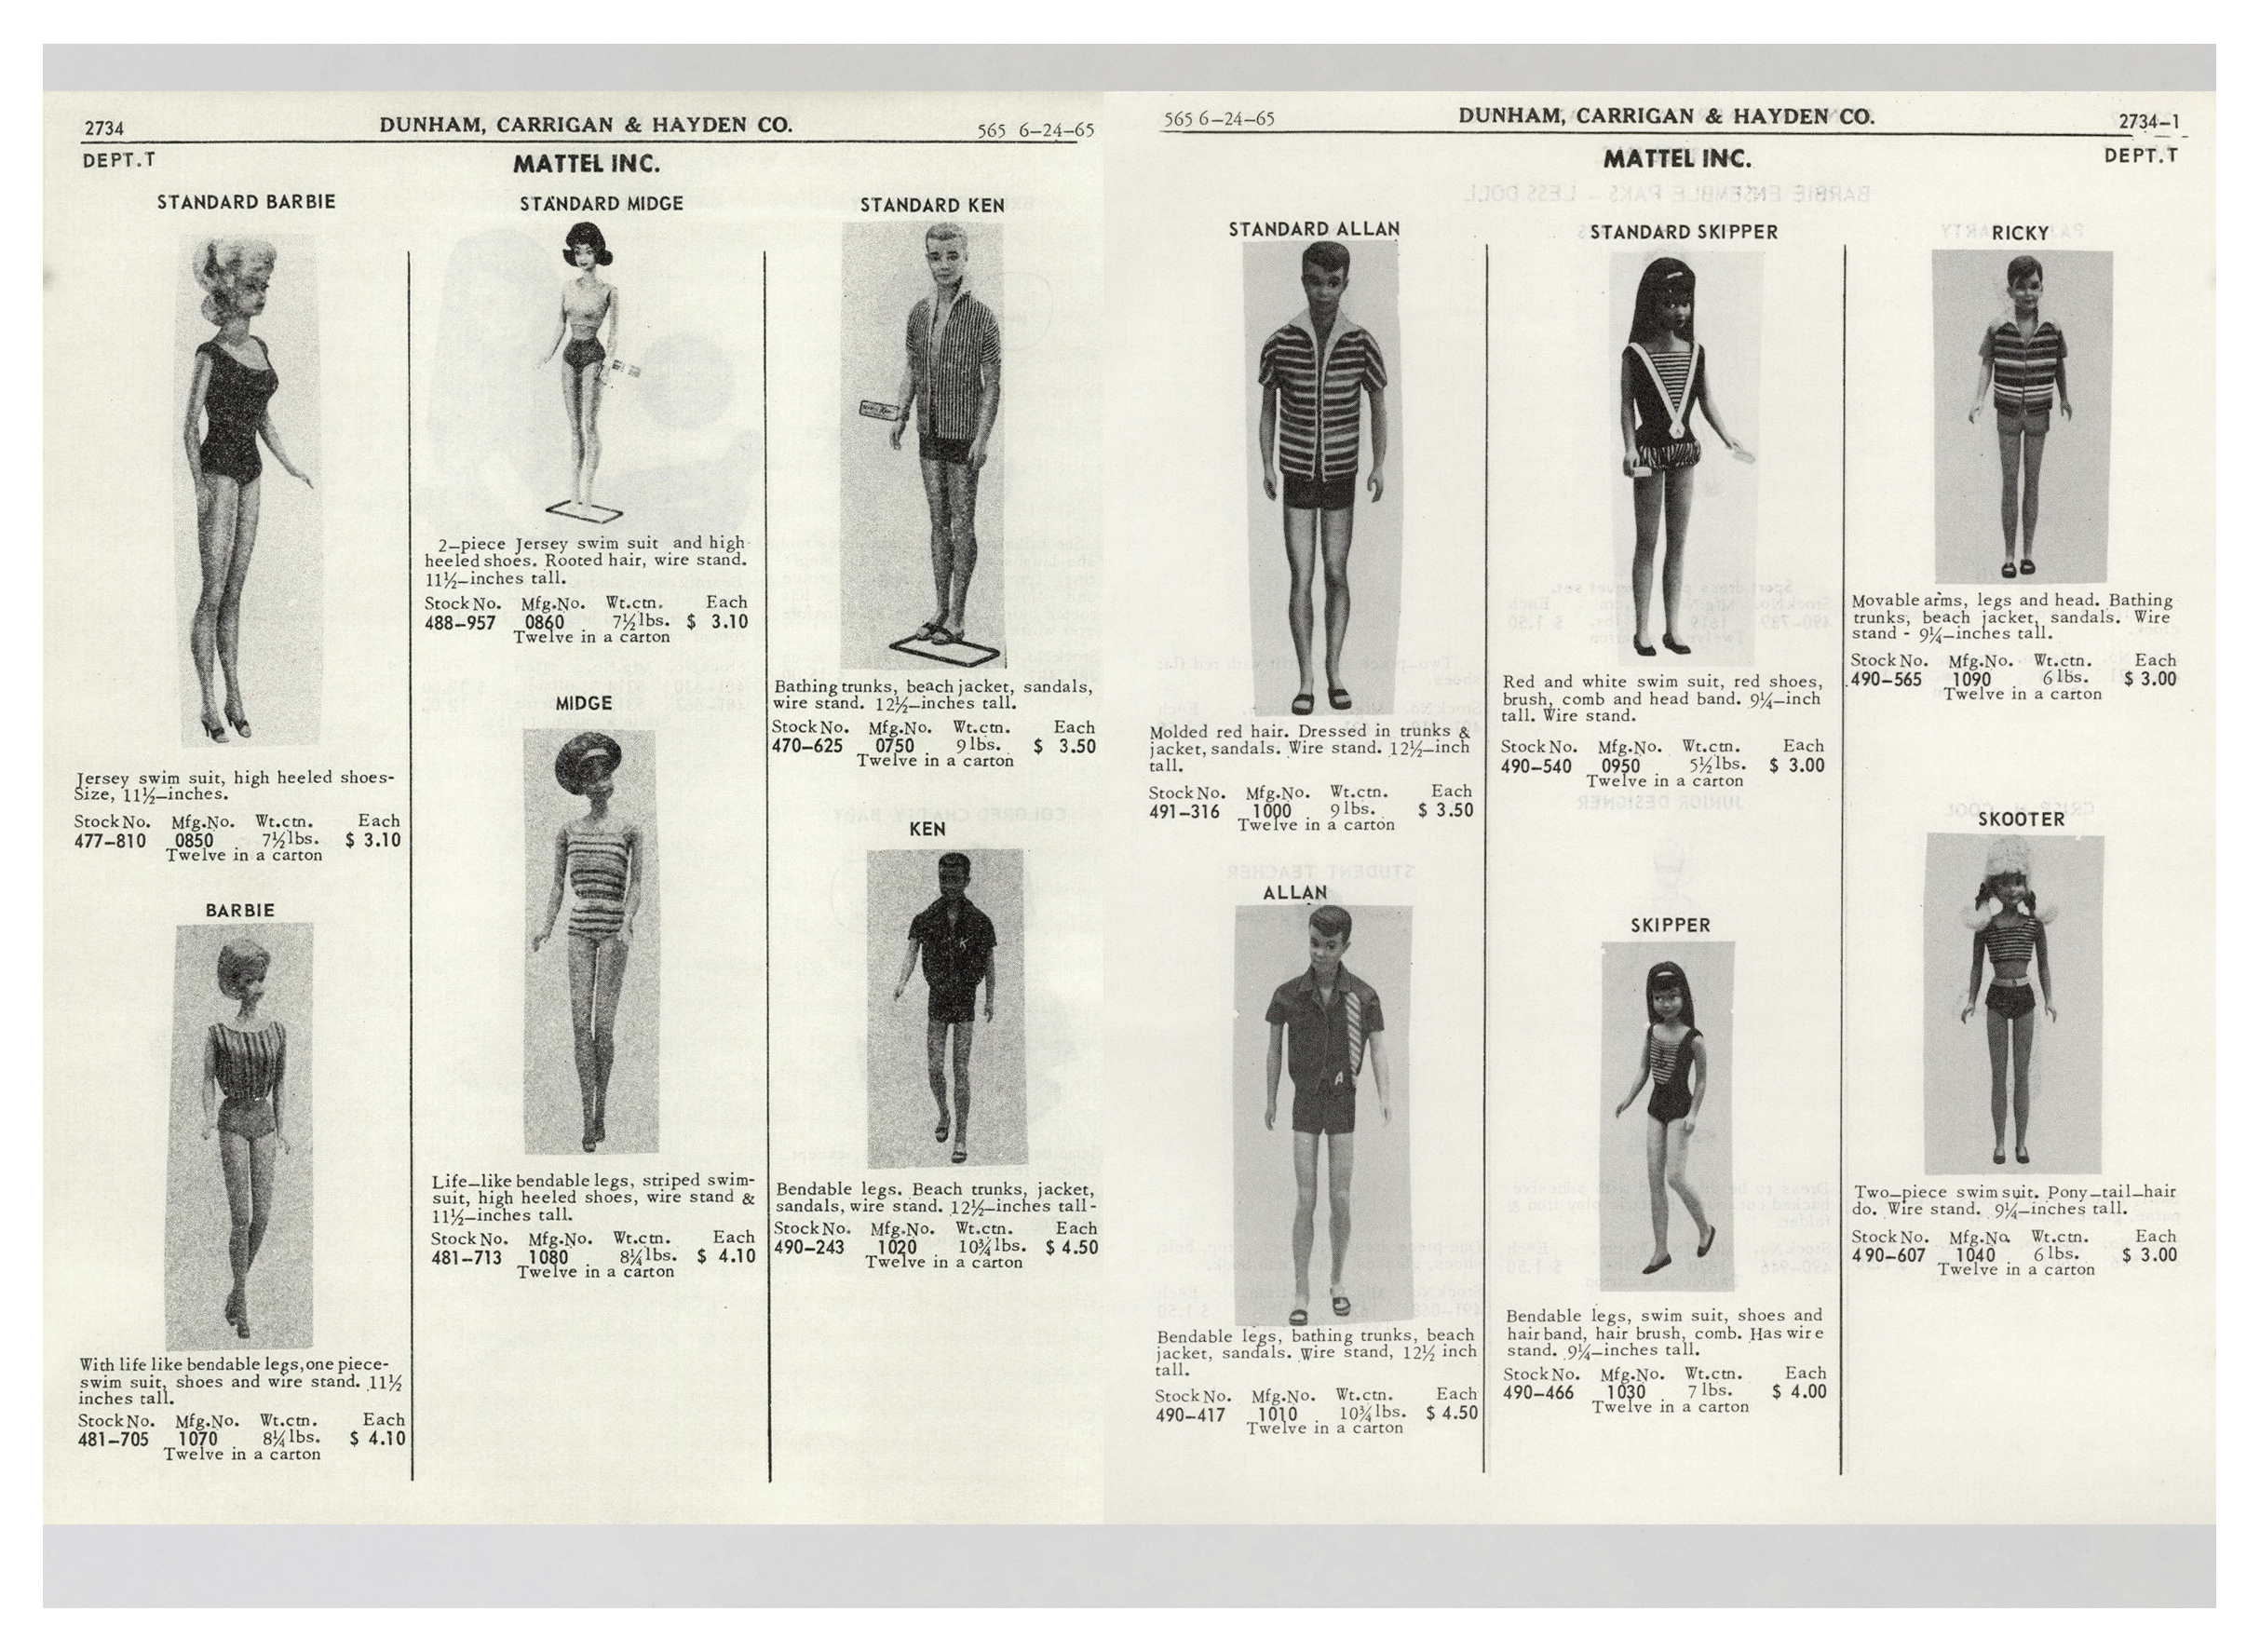 From 1965 Dunham, Carrigan, Hayden & Co. catalogue